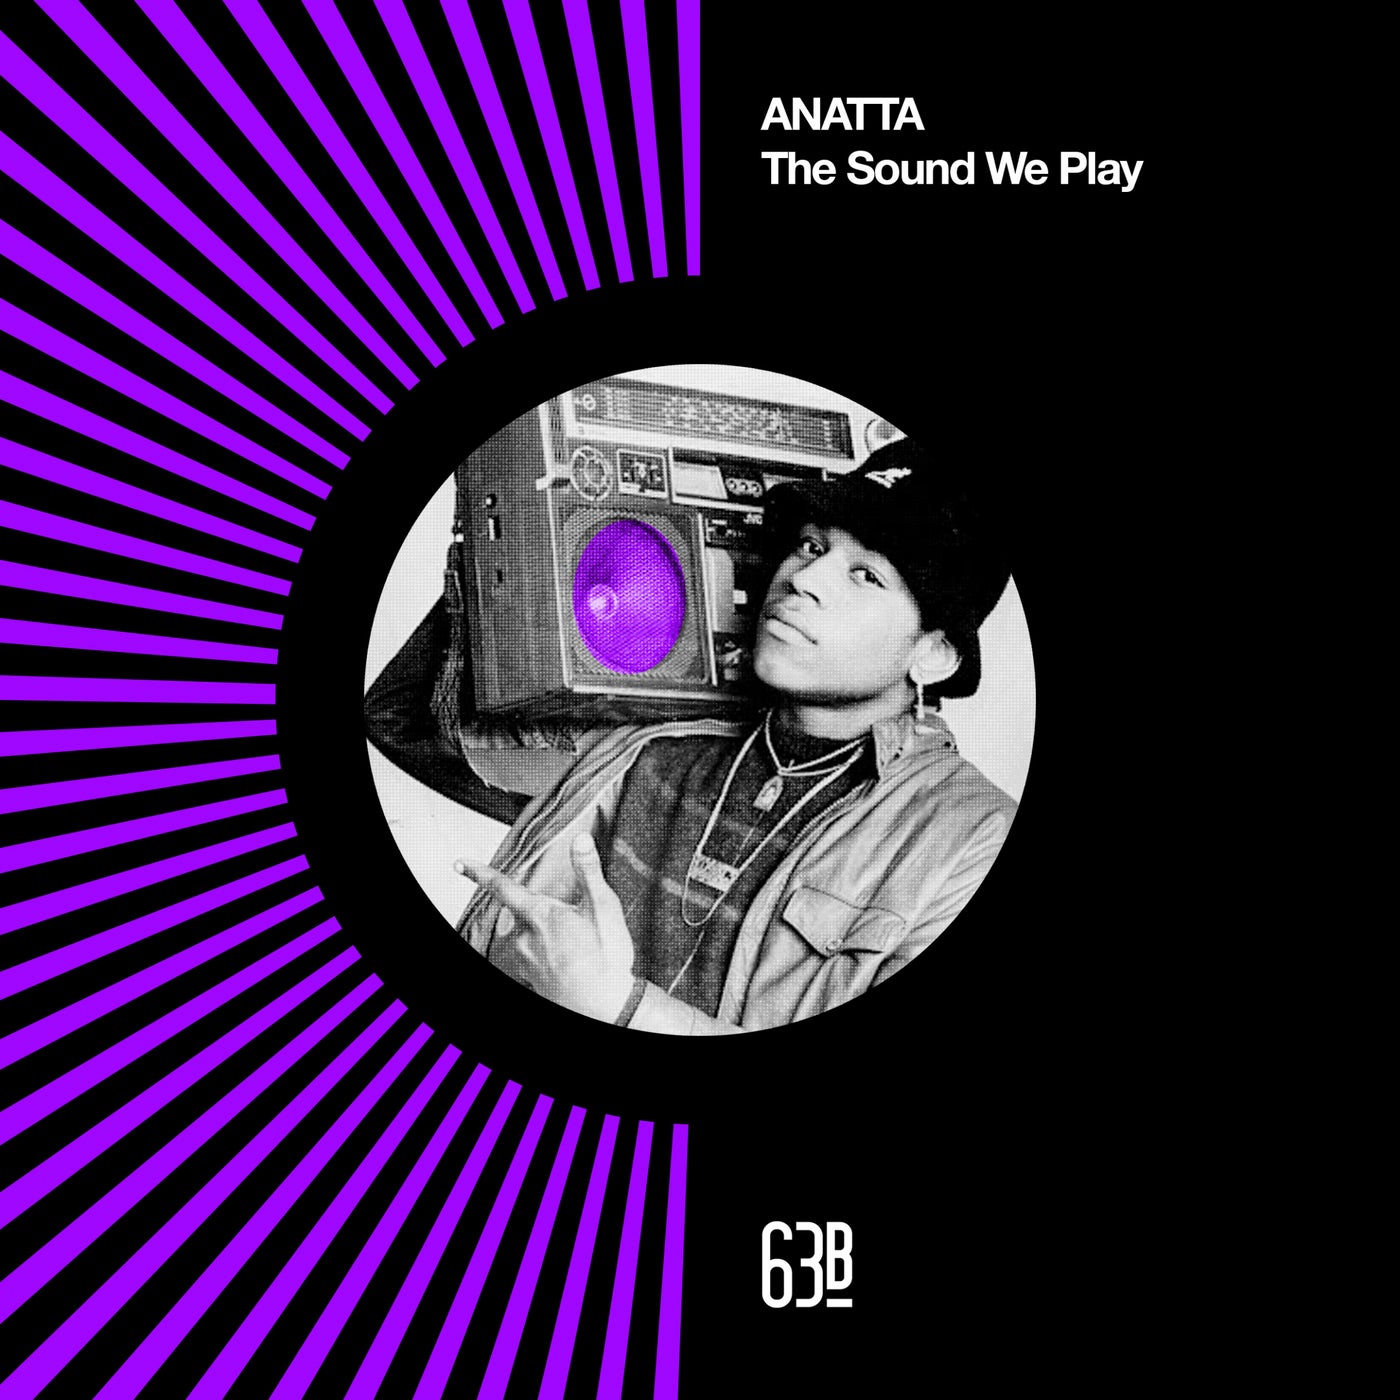 ANATTA, Cormac – The Sound We Play [63B002]